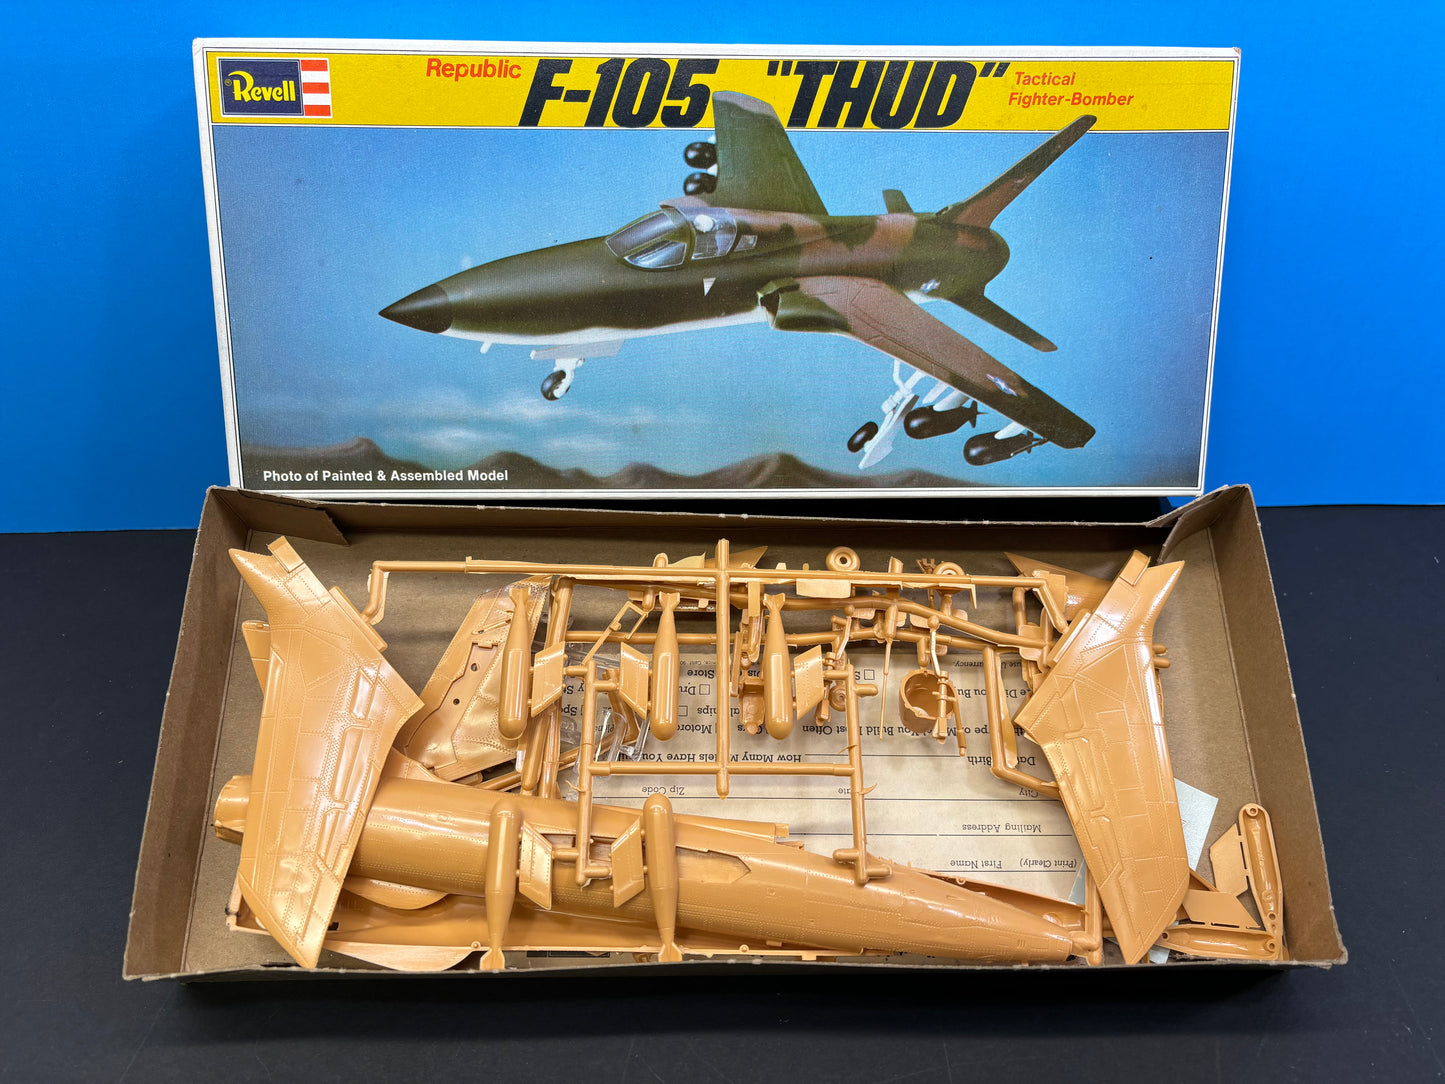 Revell F-105 "Thud" Kit # H-166 Circa: 1976